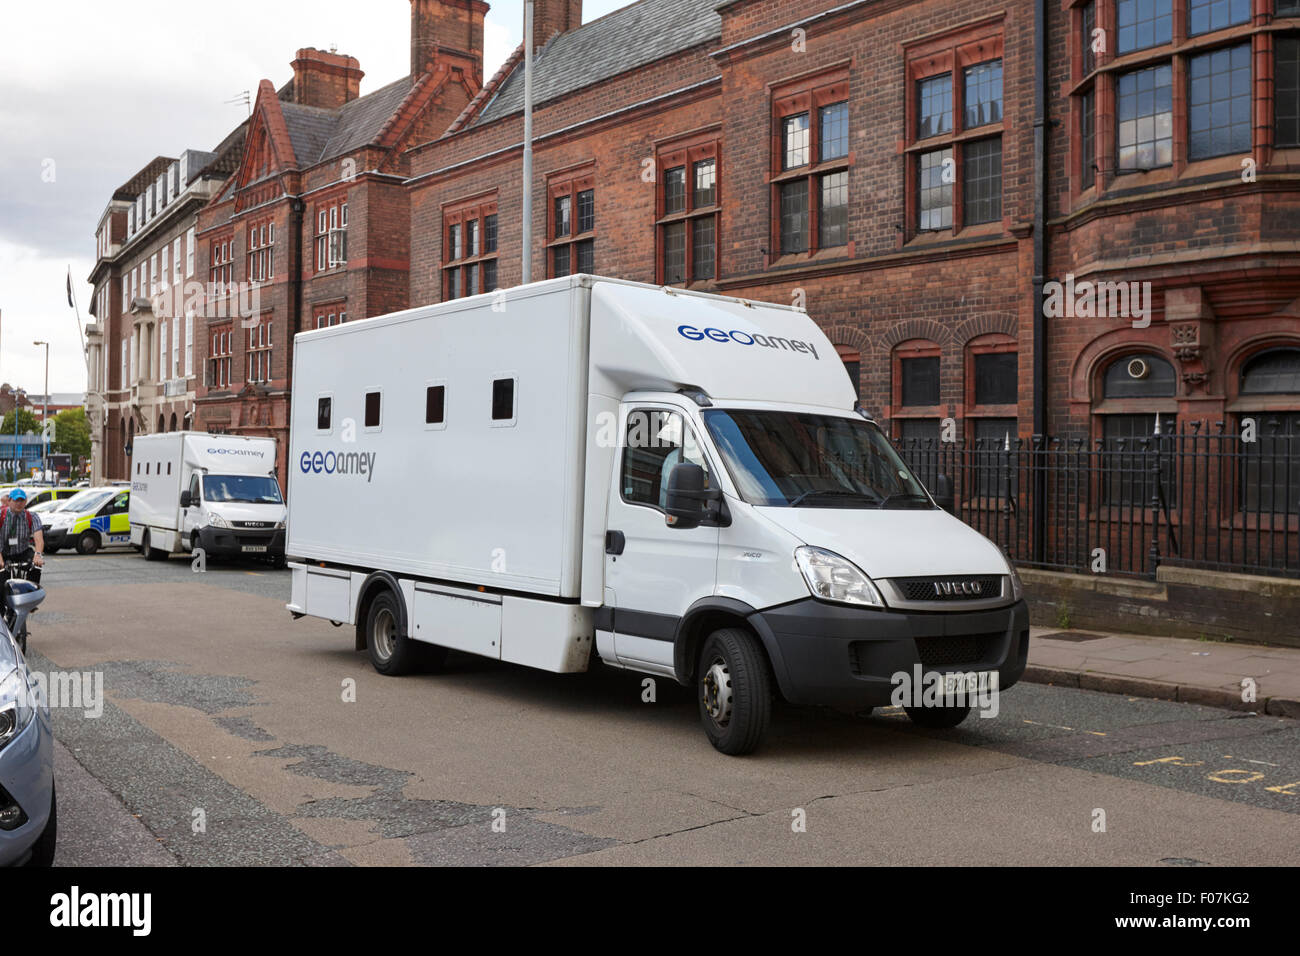 geoamey prison delivery vehicle Birmingham UK Stock Photo